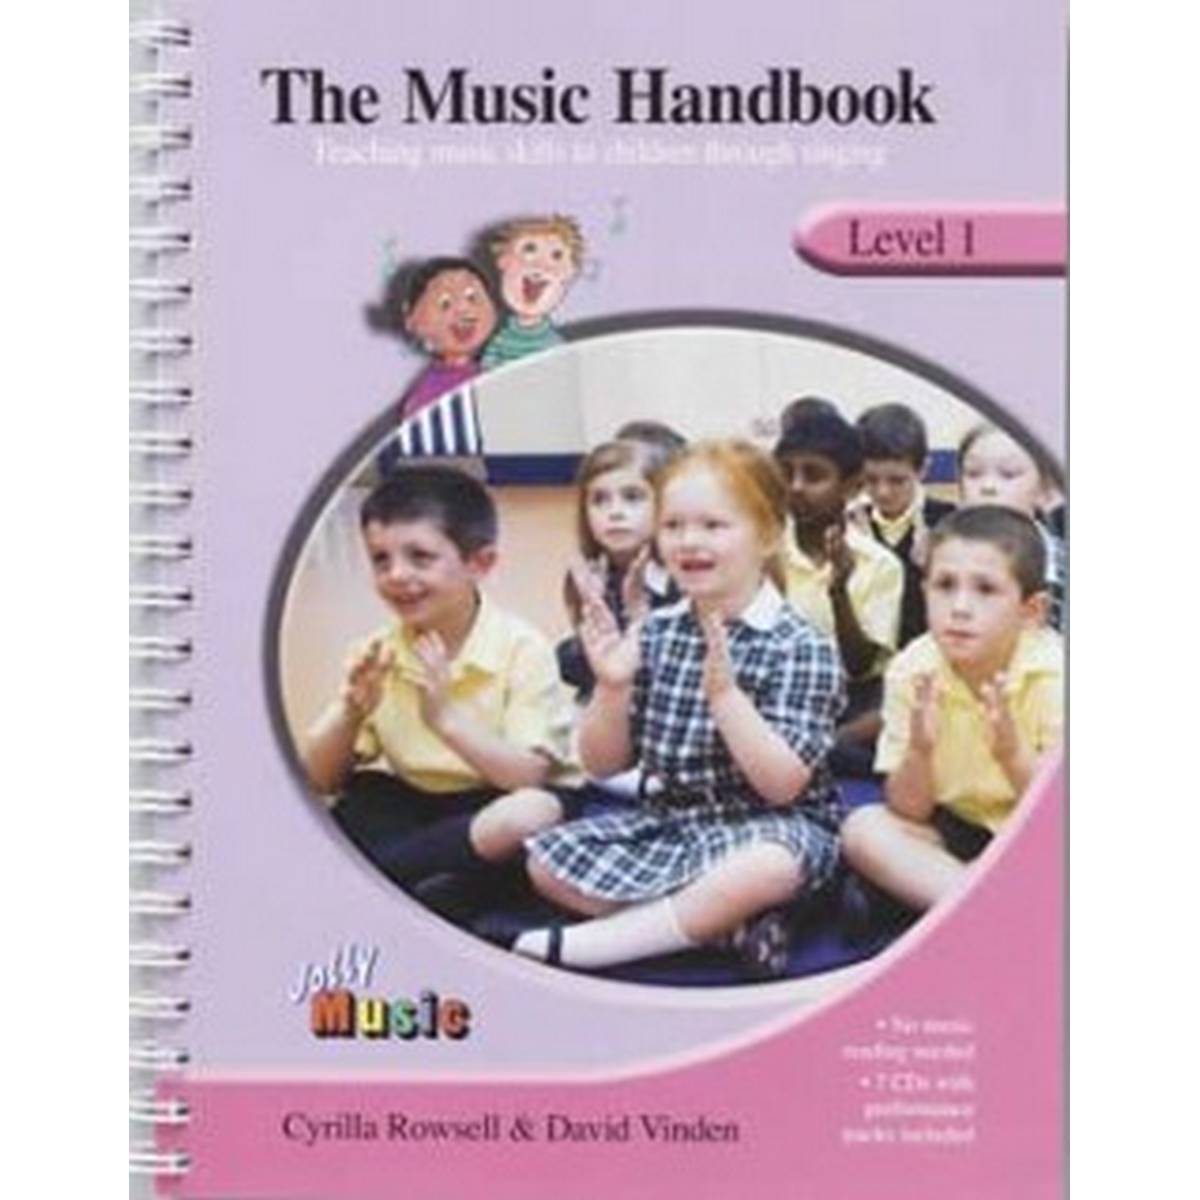 Jolly Music Handbook Level 1